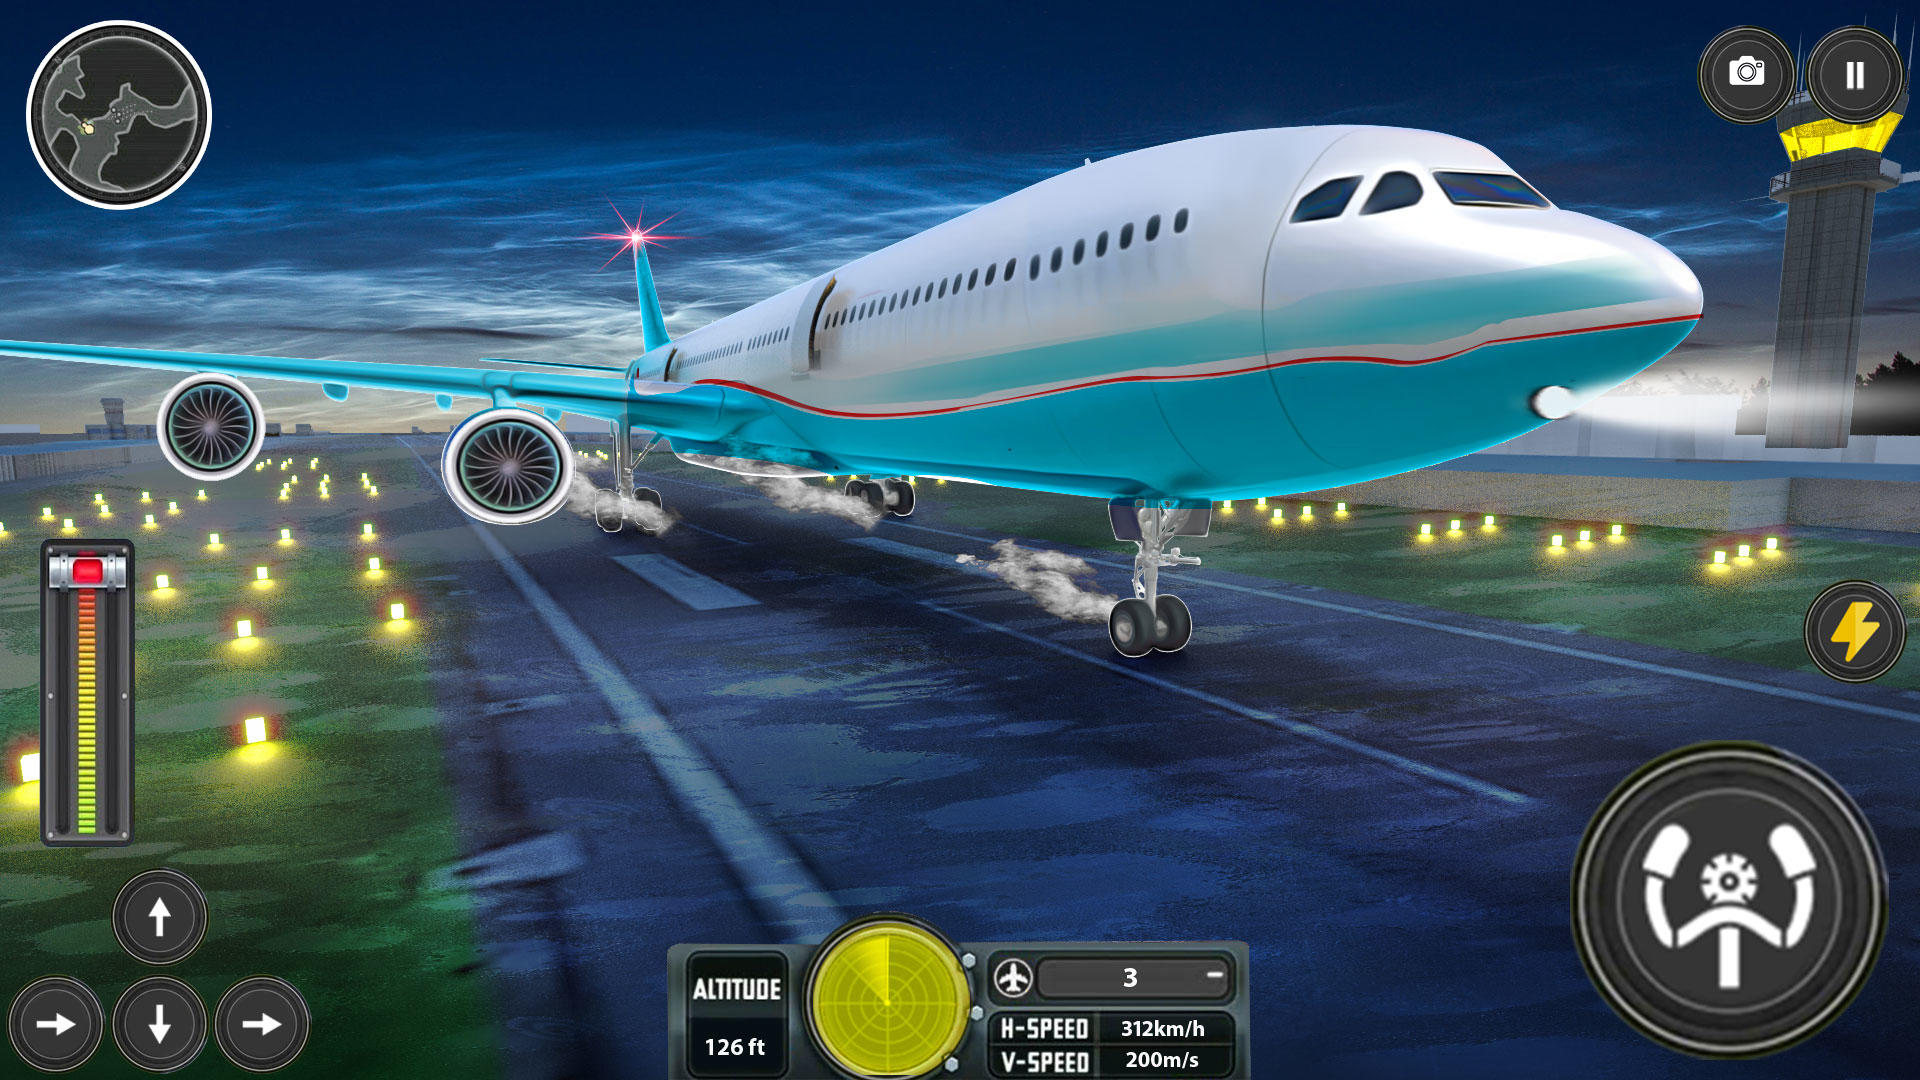 Flight Simulator airplane Games: Extreme Flying Plane simulator